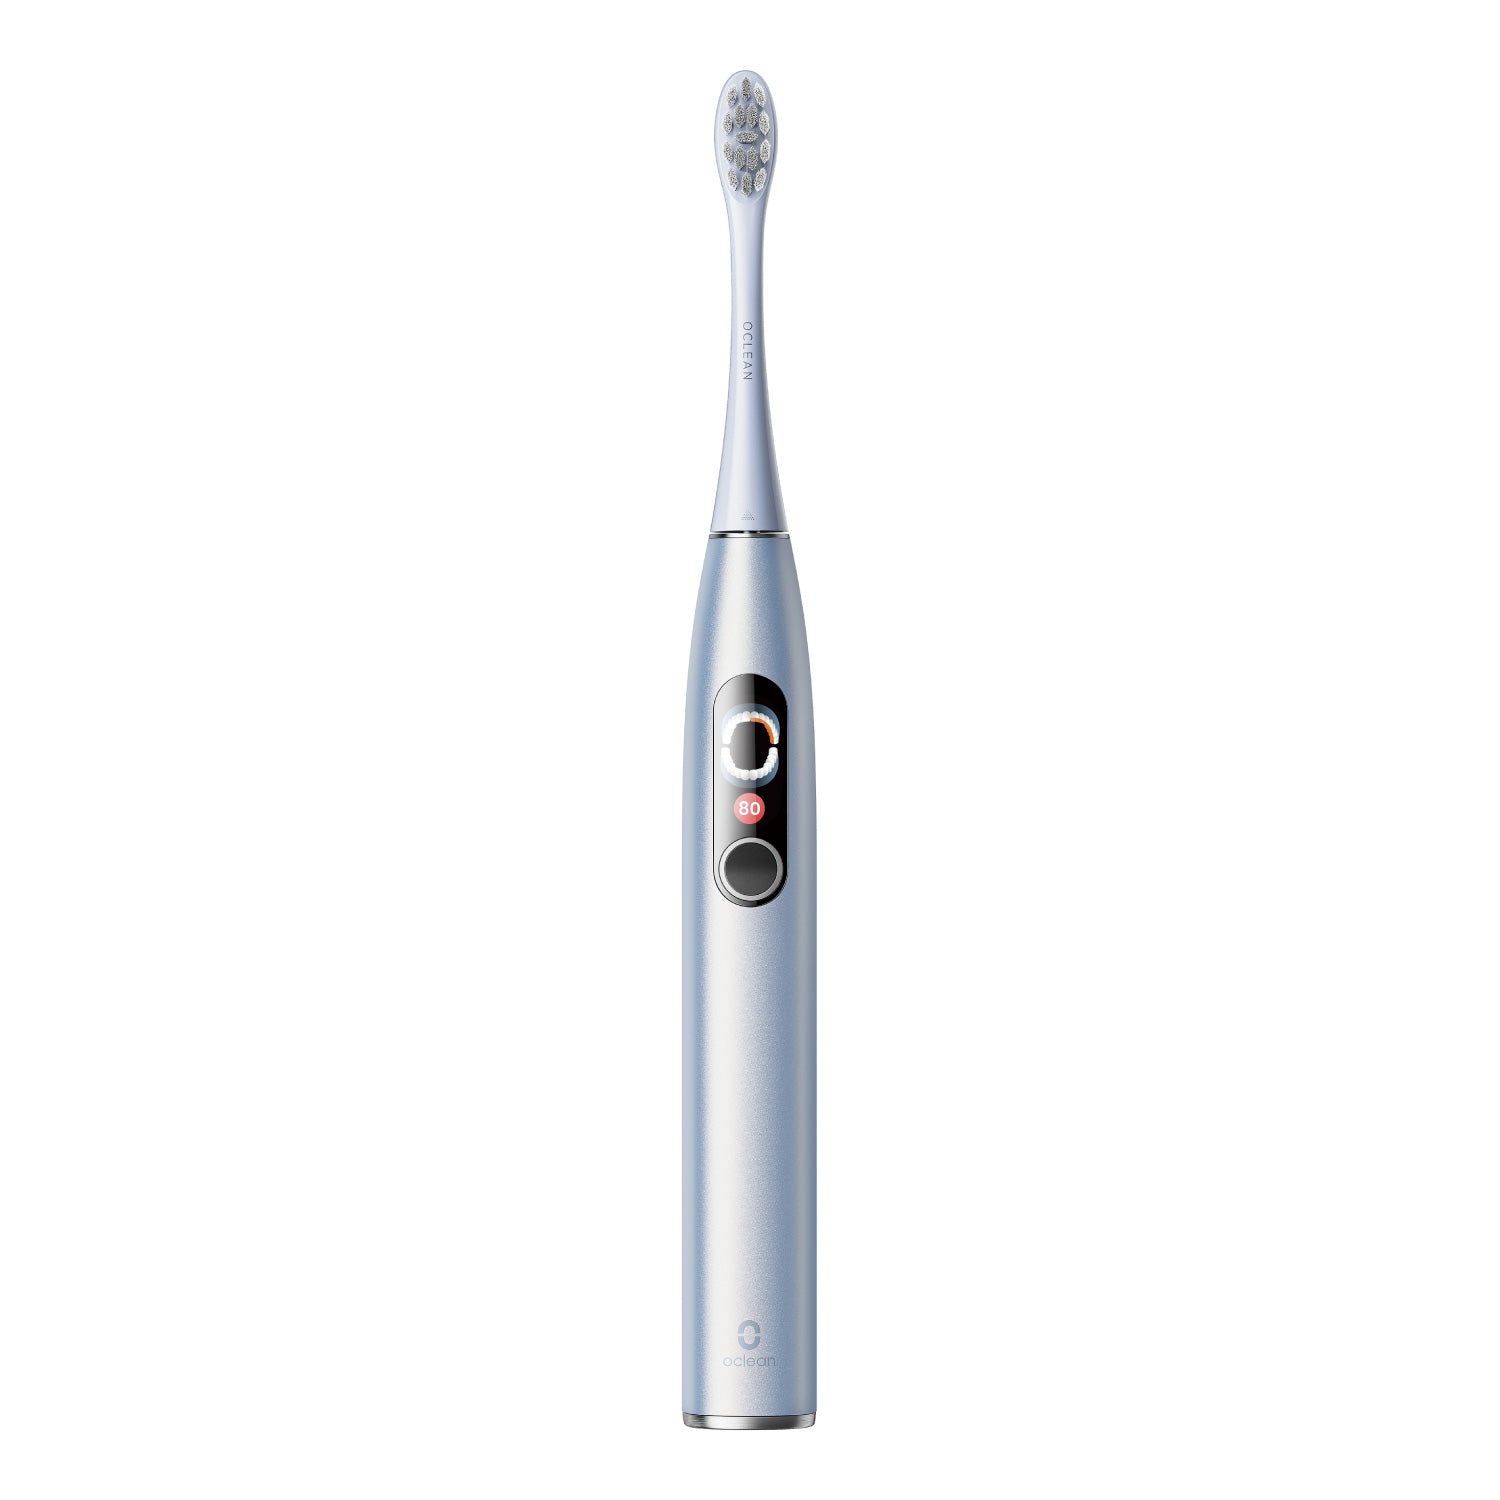 Oclean X Pro Digital Elektrische Schallzahnbürste Toothbrushes Oclean Official Gold - Oclean